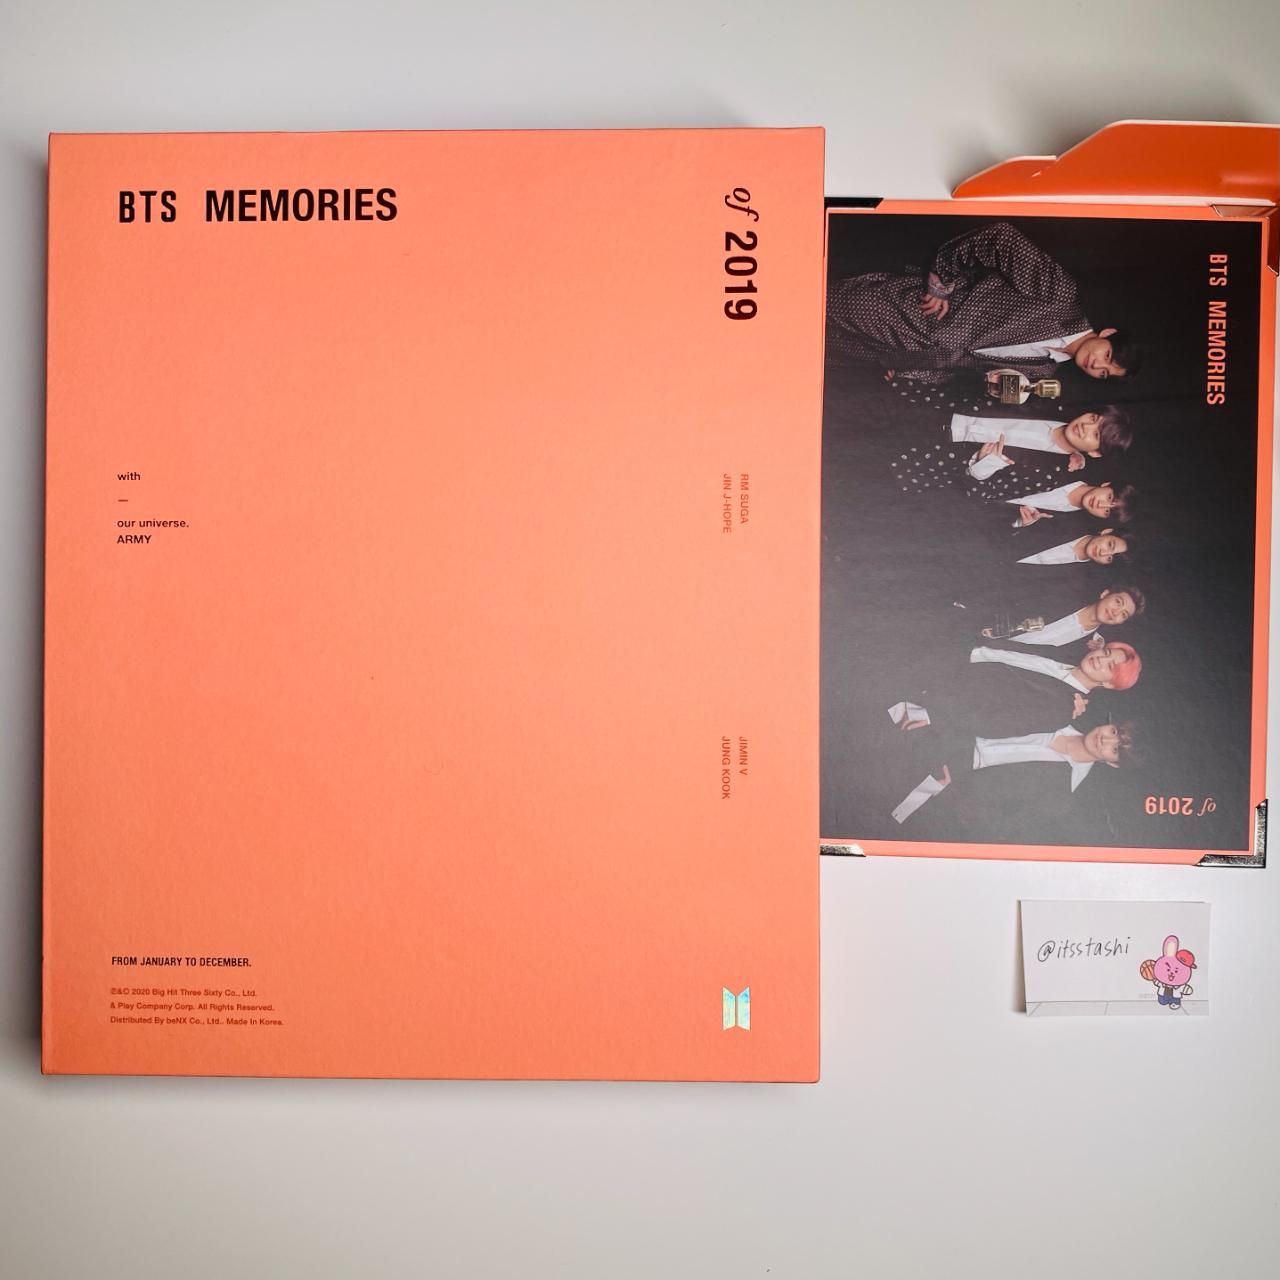 BTS Memories of 2019 DVD (my personal BTS... - Depop